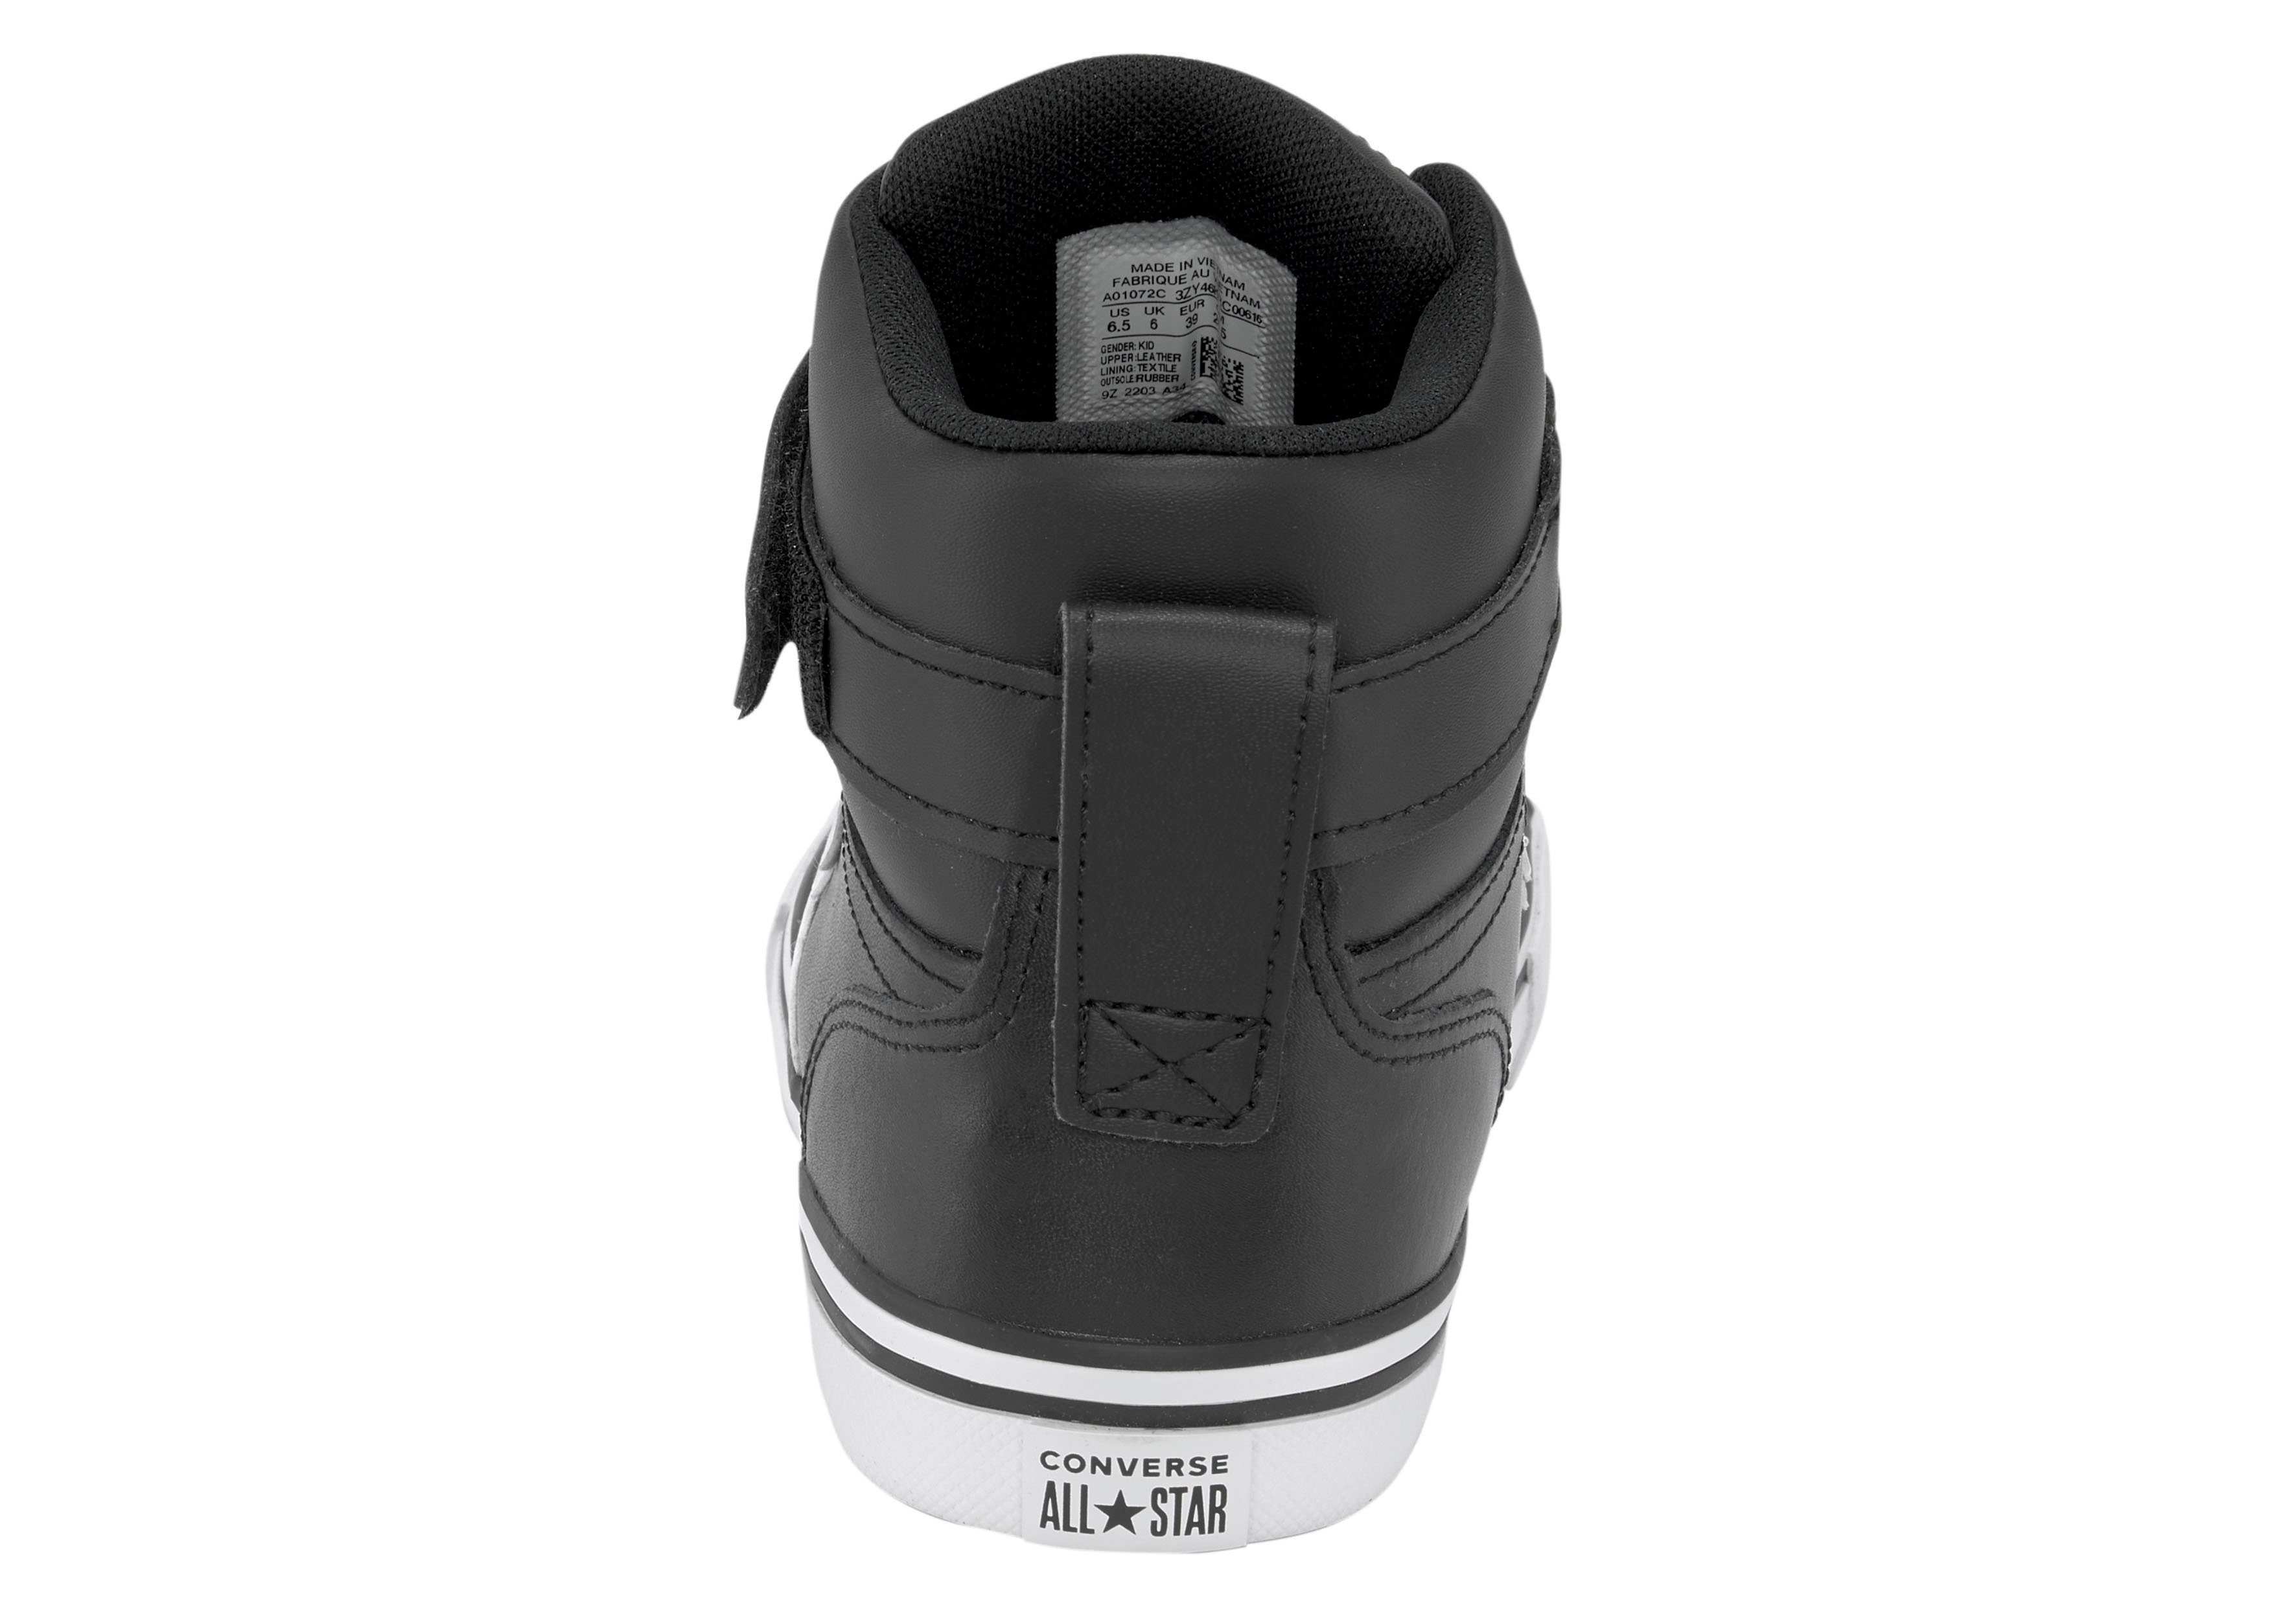 BLAZE schwarz-weiß LEATHER Converse Sneaker PRO STRAP